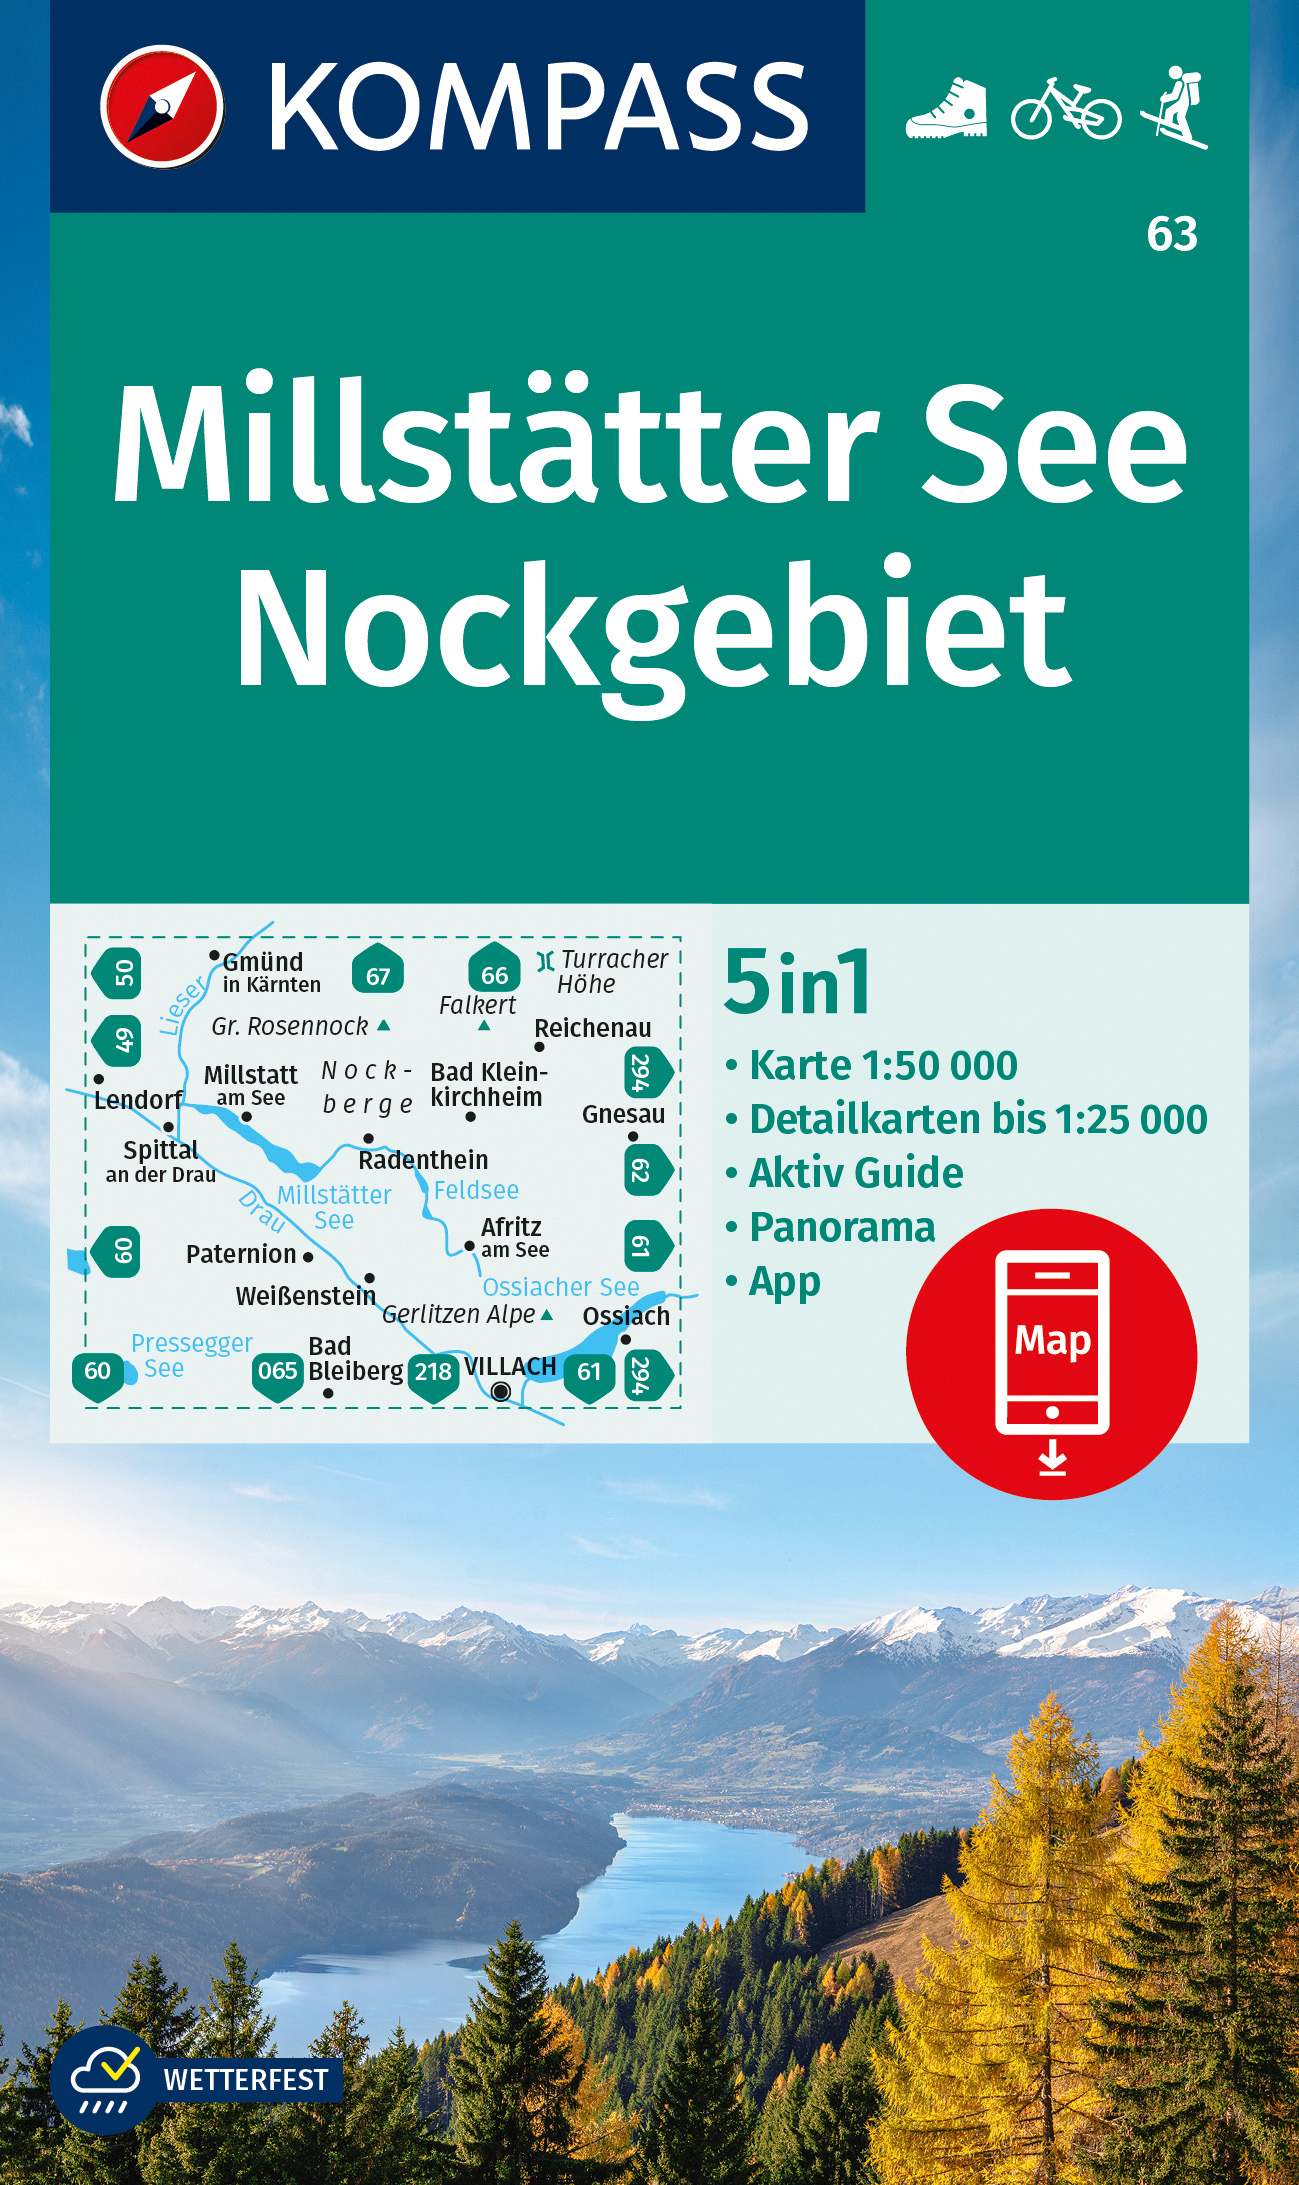 Millstätter See, Nockgebiet (Kompass - 63) - turistická mapa